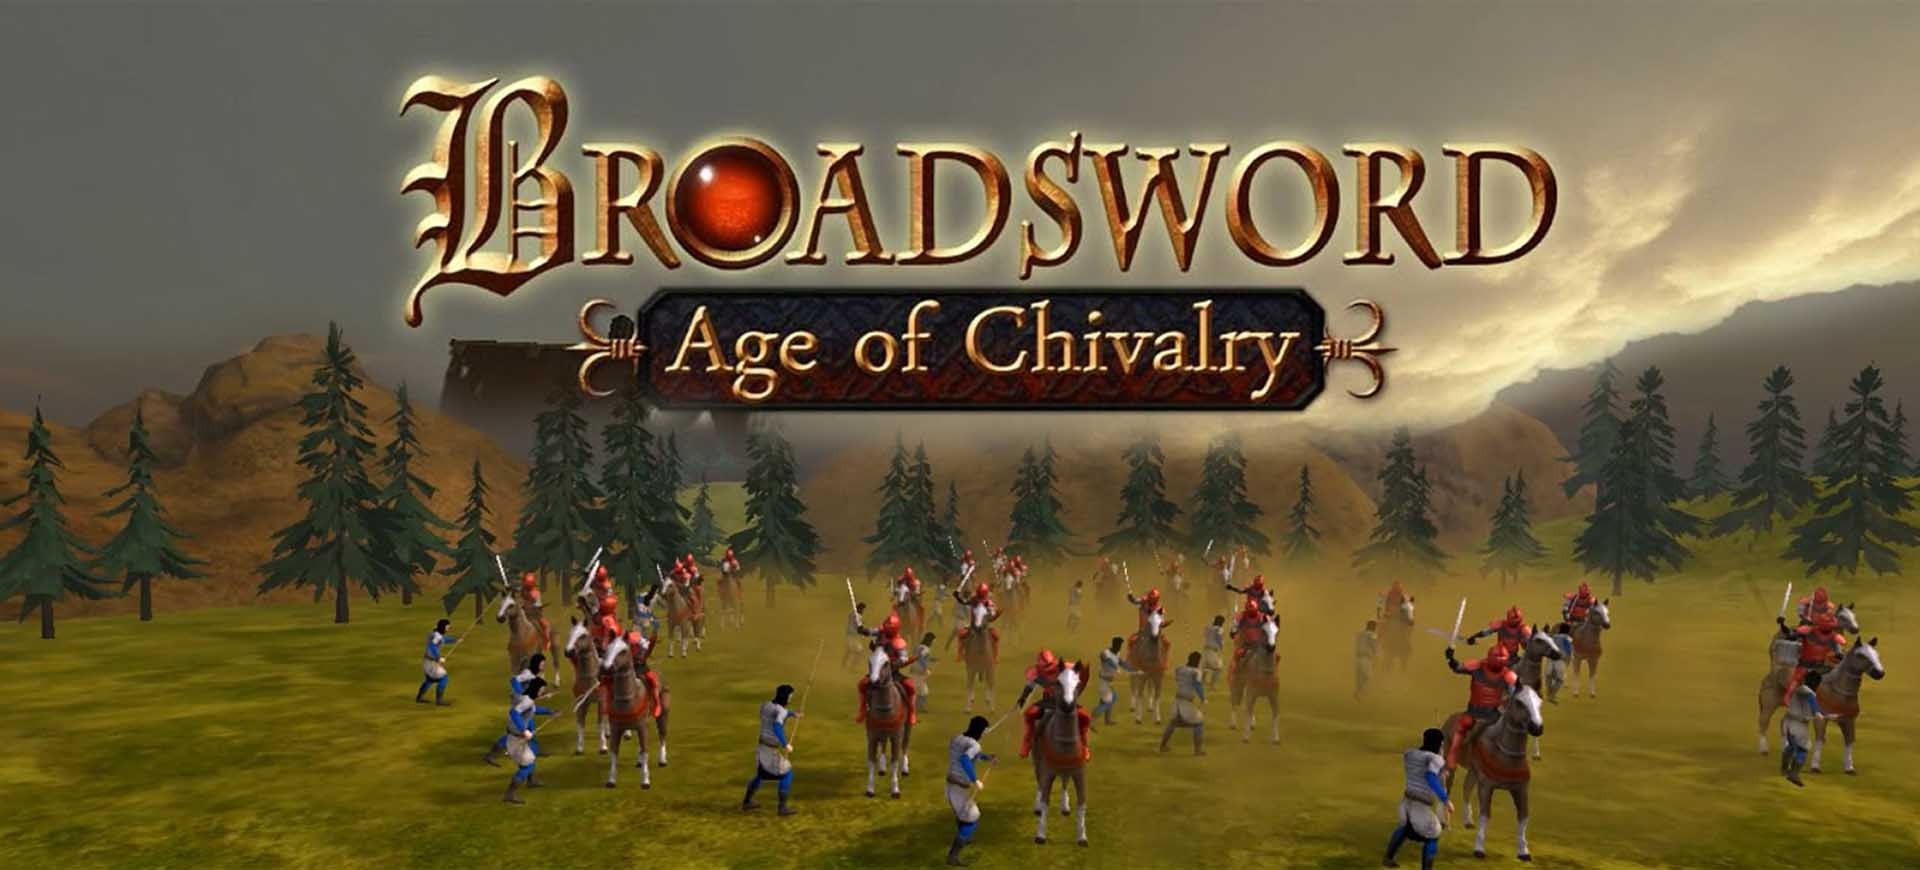 Broadsword: Age of Chivalry – Đánh Giá Game